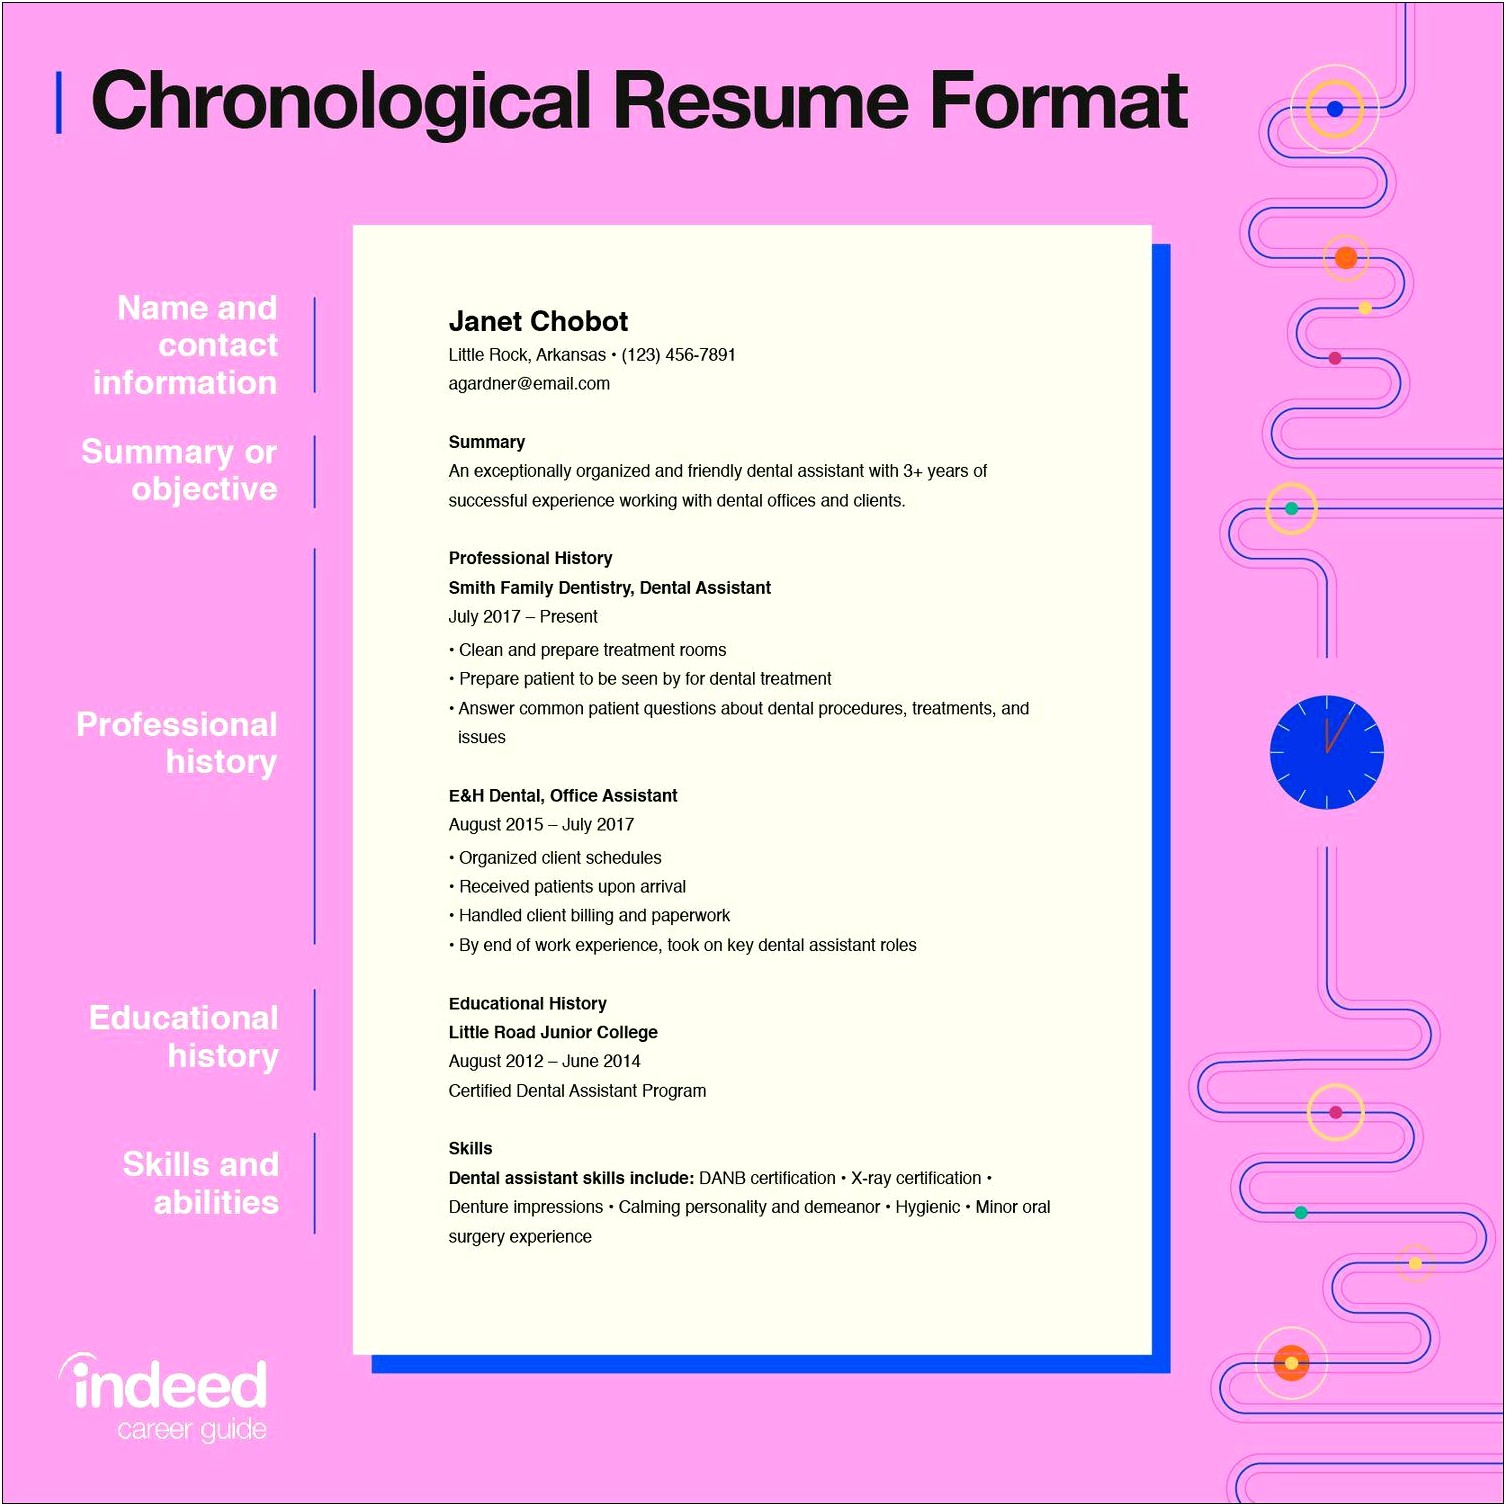 Do You Post Irrelevant Jobs On Resume